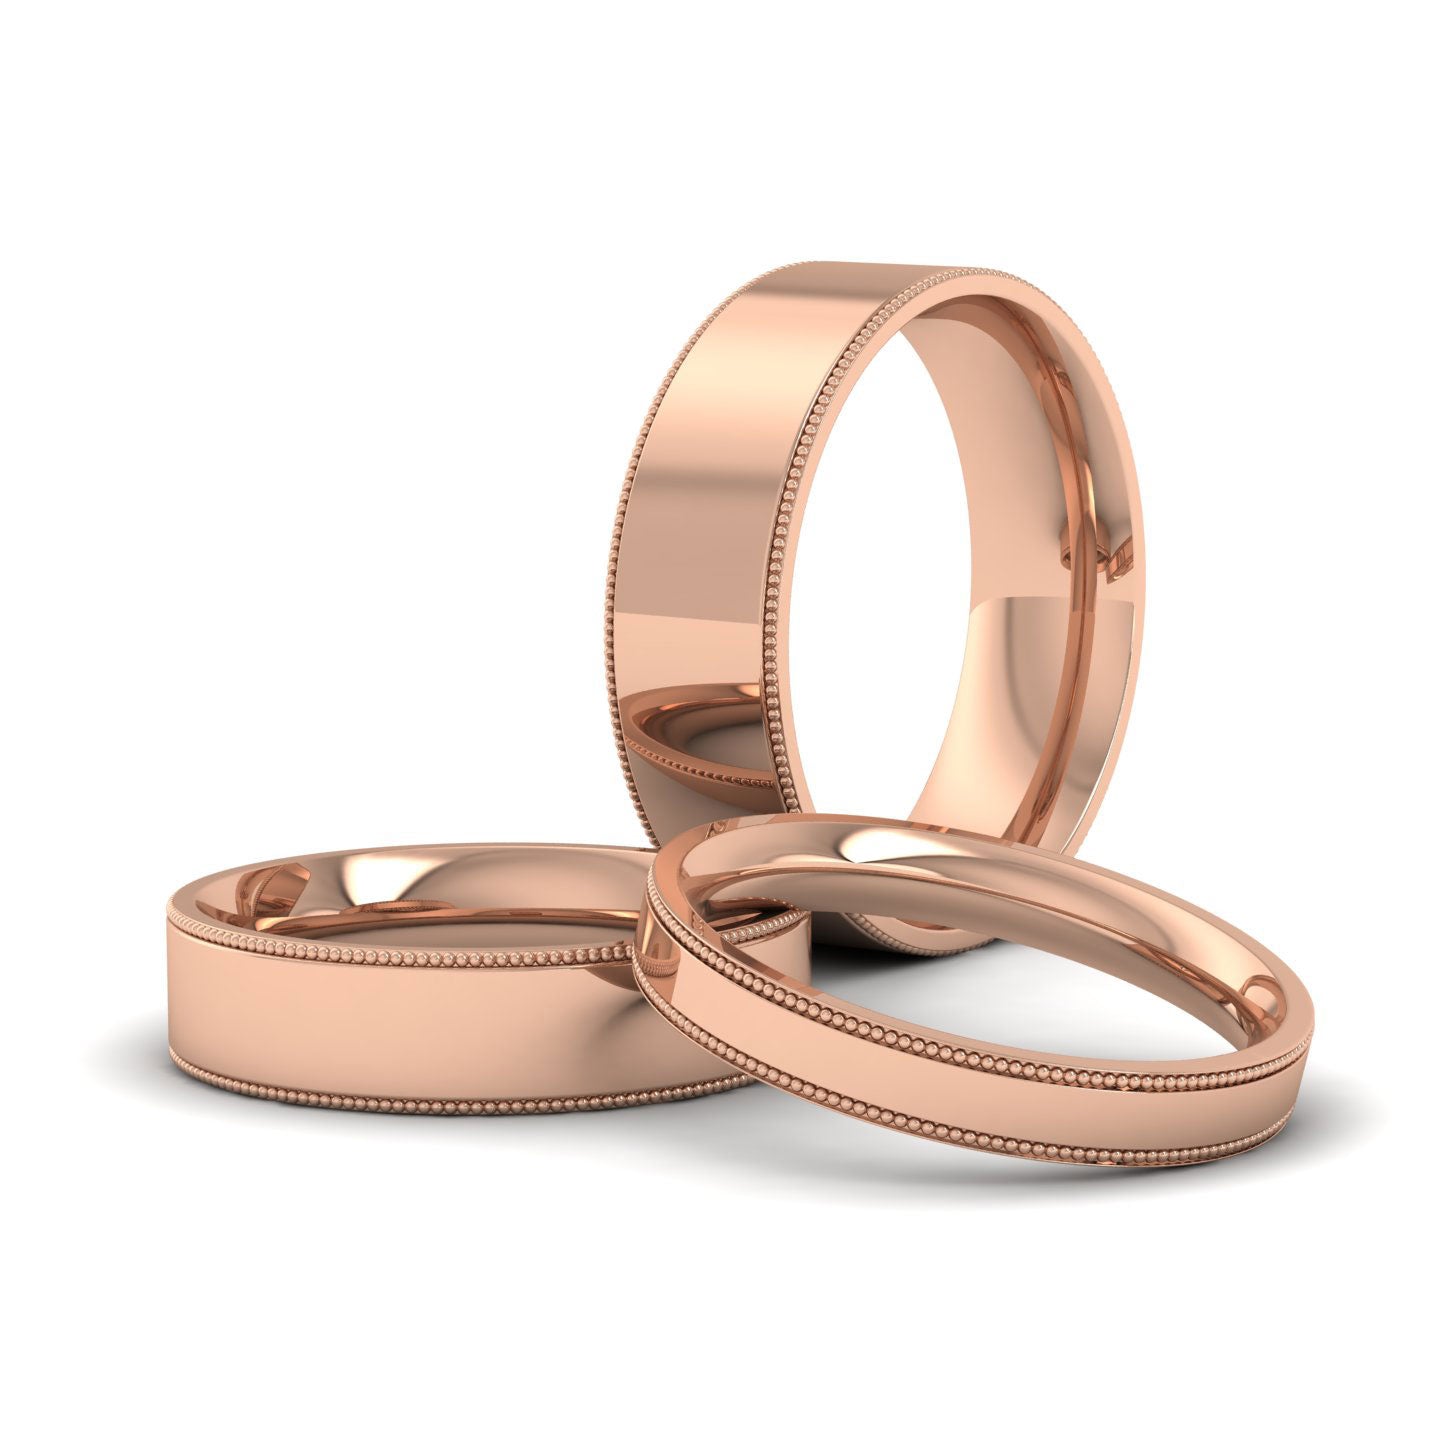 Millgrain Edge 9ct Rose Gold 7mm Flat Comfort Fit Wedding Ring